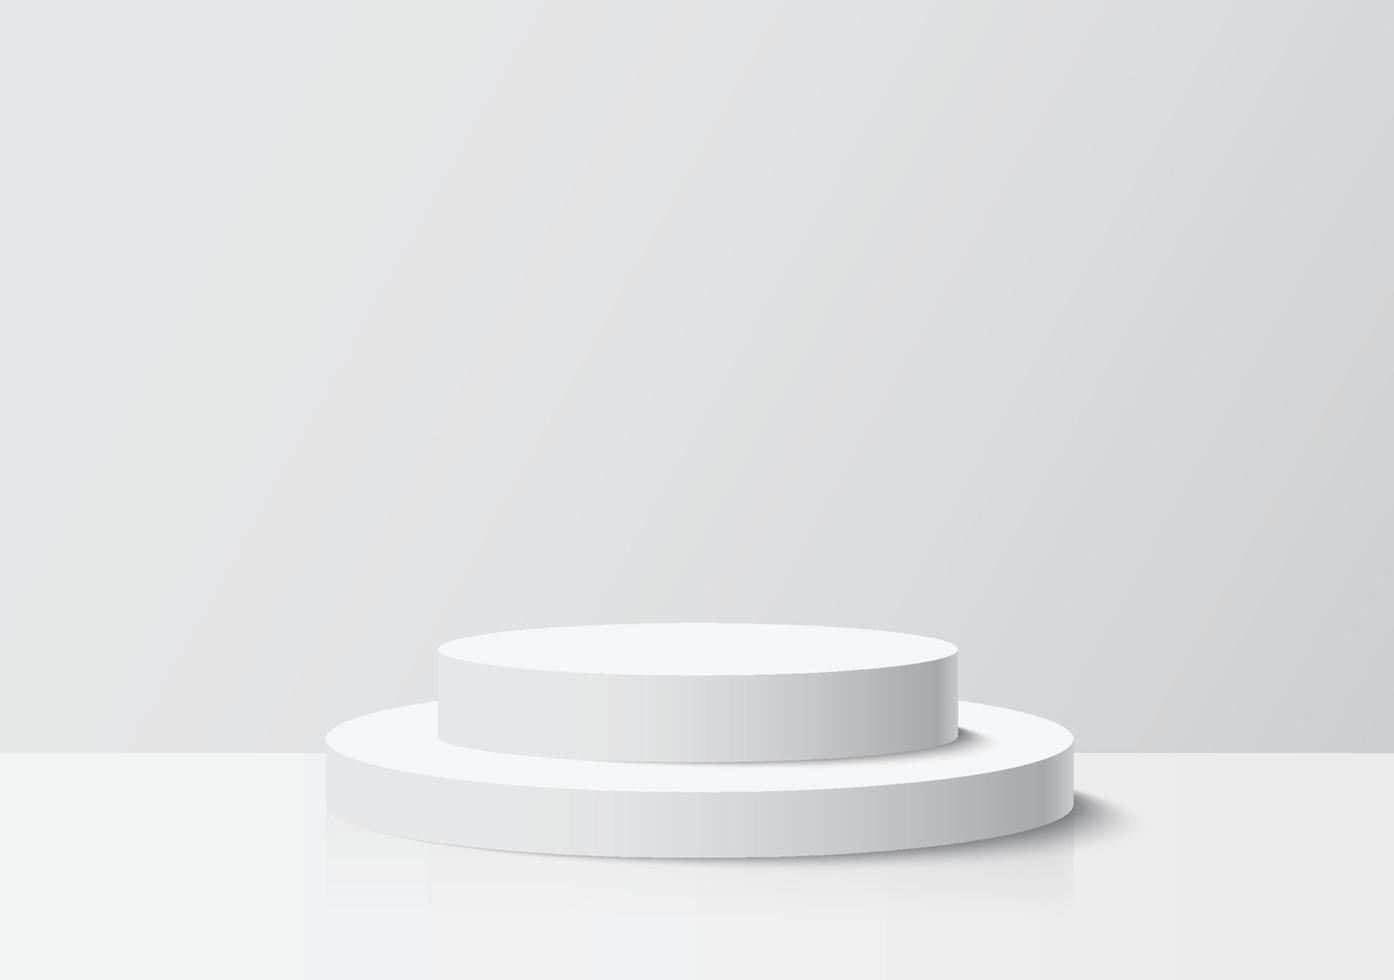 blanco cilindro etapa pedestal podio con antecedentes. utilizar para producto monitor presentación, escaparate, burlarse de arriba. vector